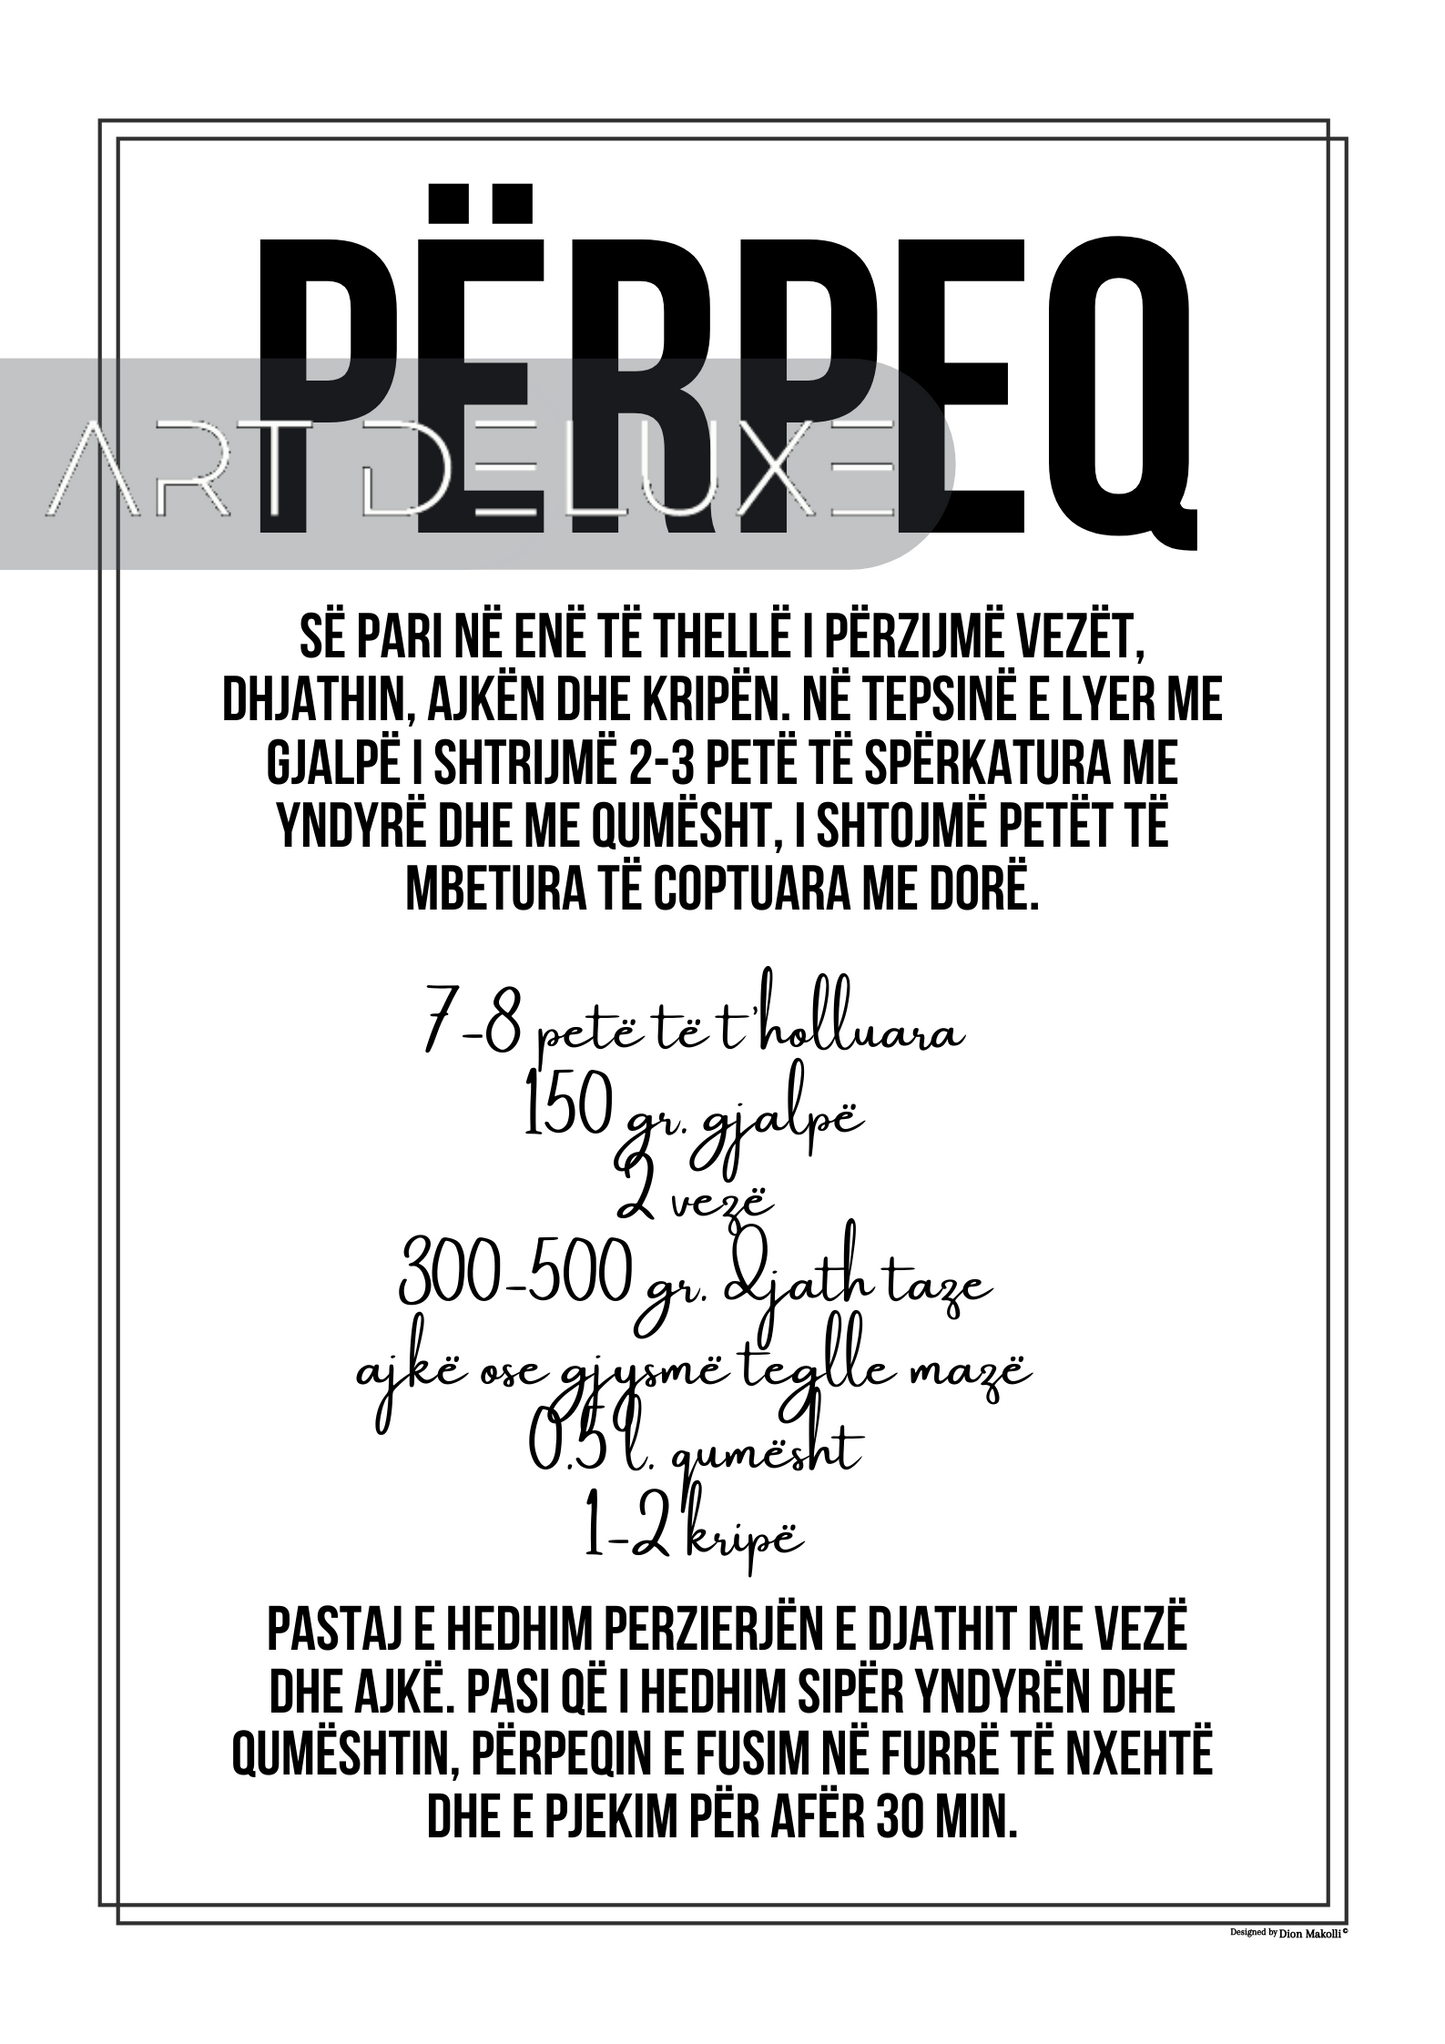 Perpeq - Albanskt Recept Poster